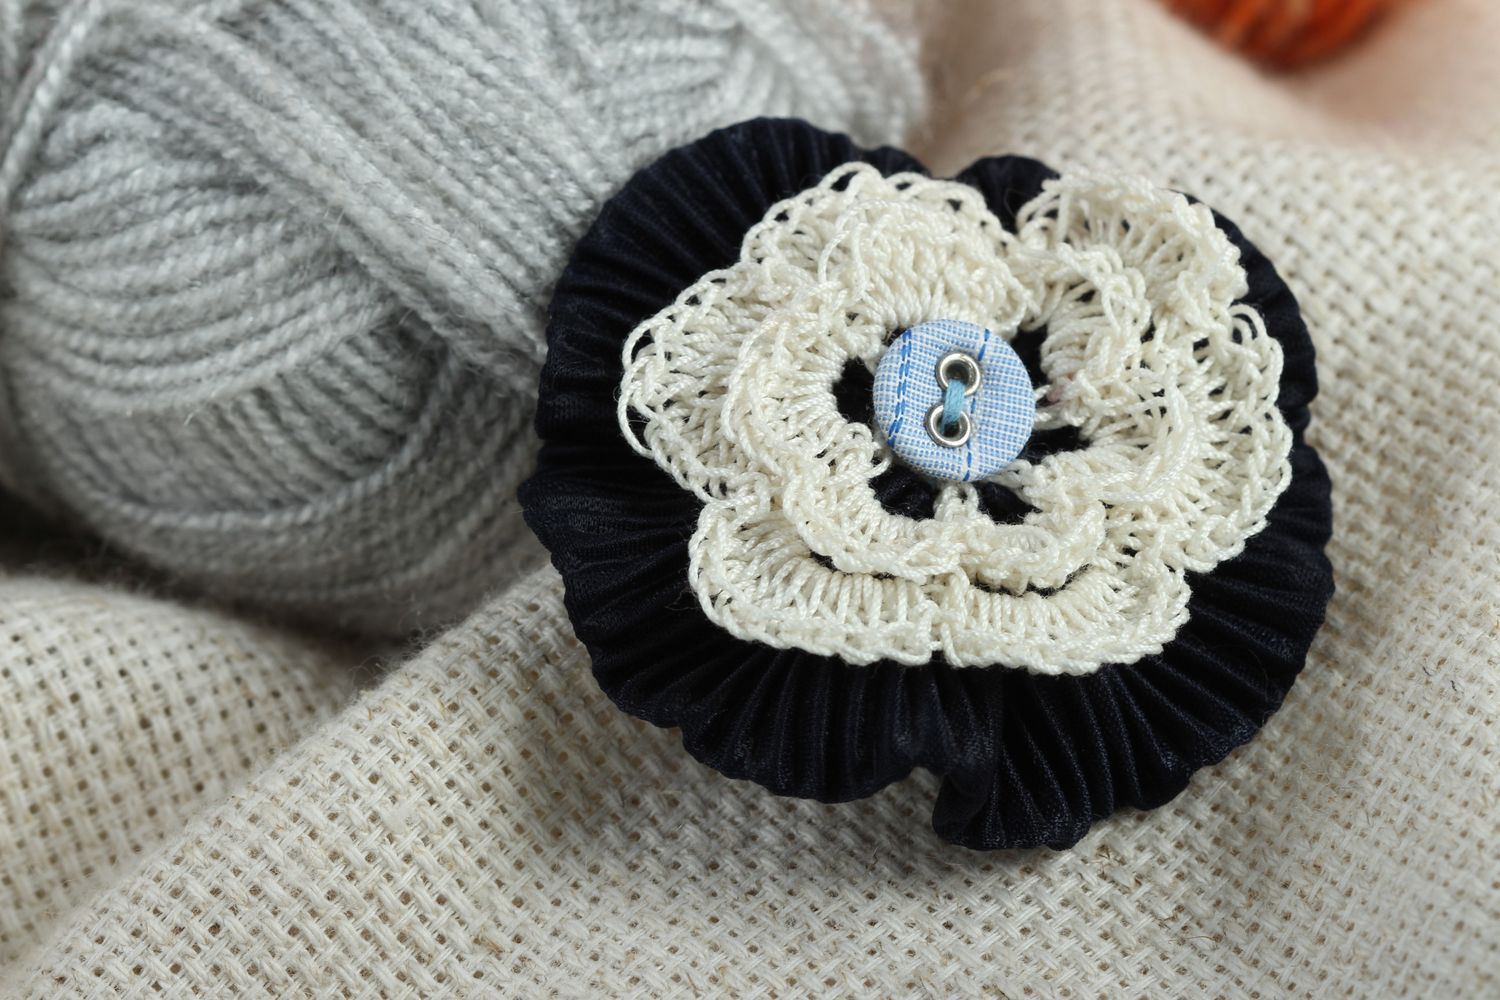 Handmade crochet flower jewelry findings jewelry making supplies small gifts photo 1